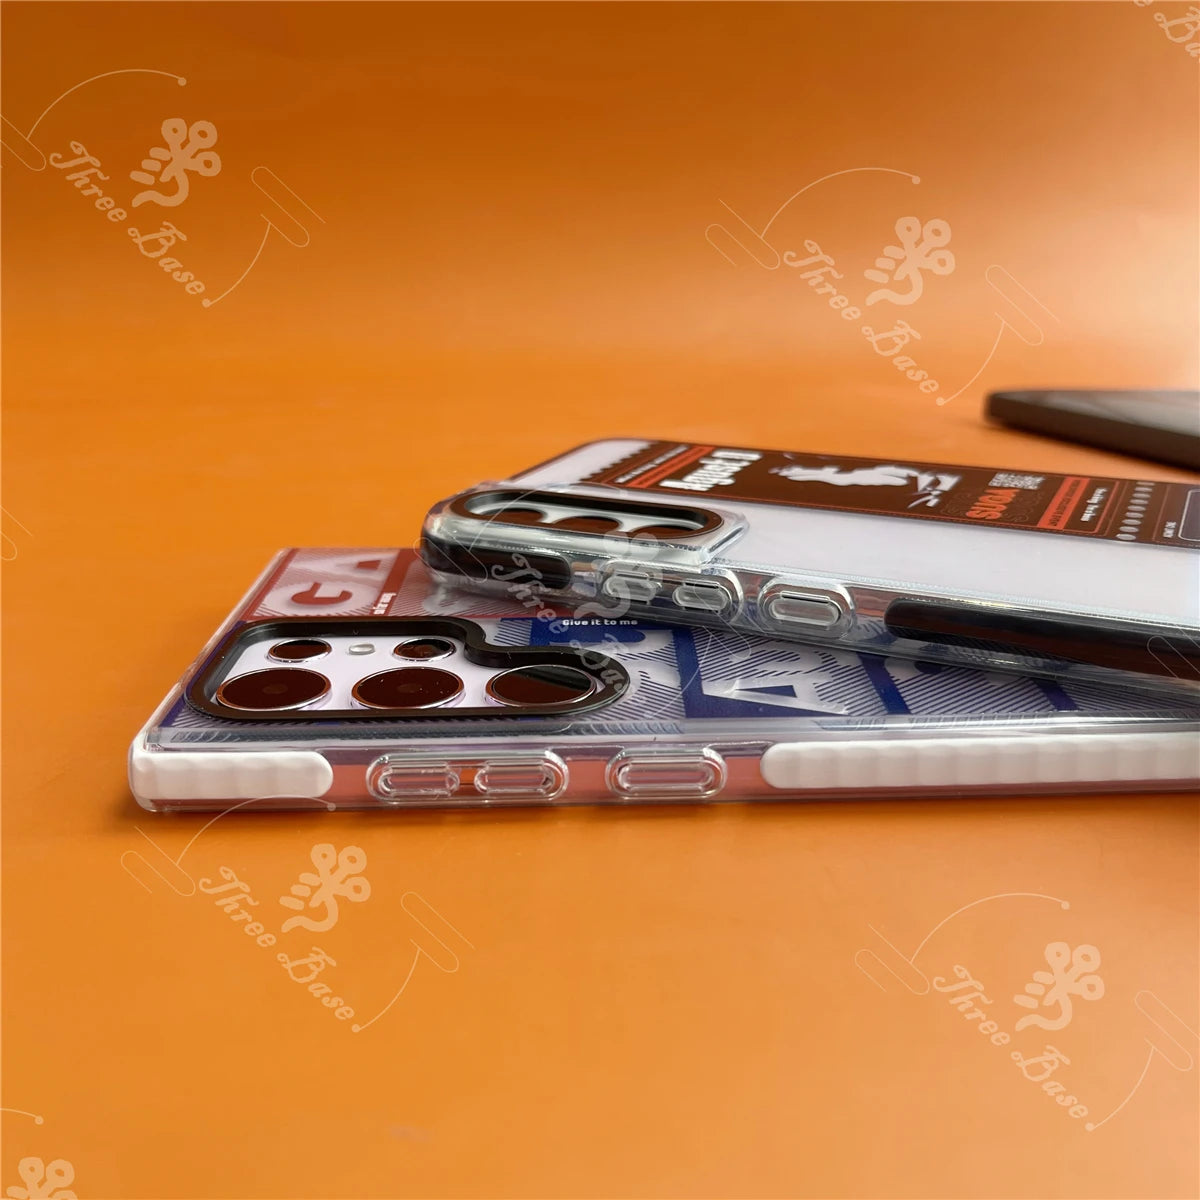 SUGA AgustD D-DAY Samsung Phone Case